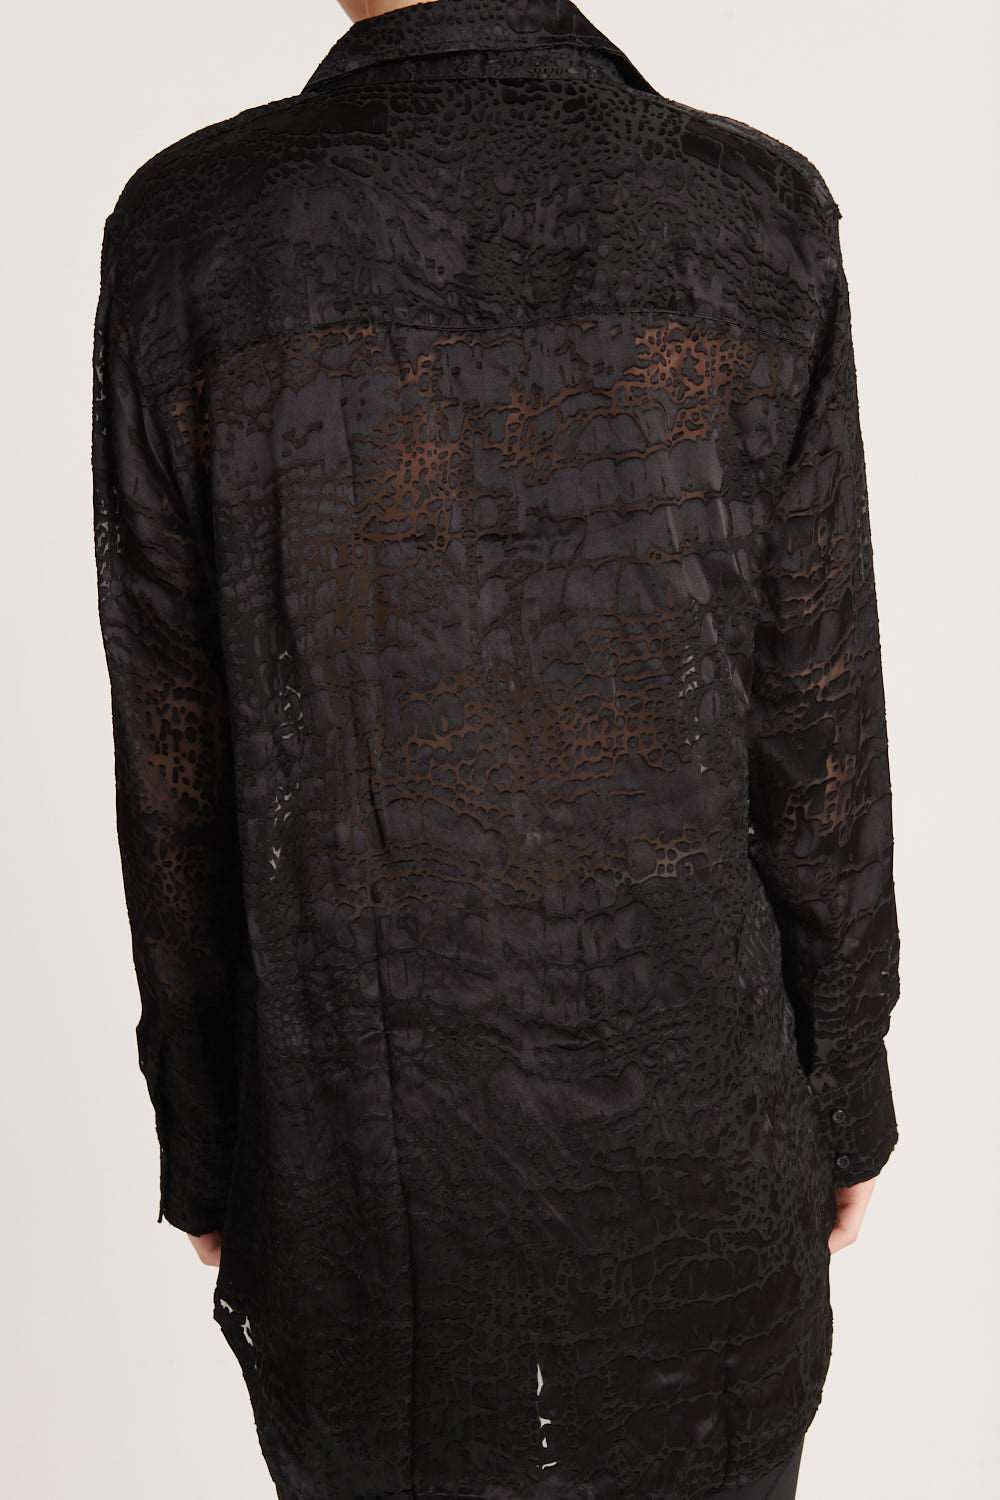 Croc Silk Shirt Black